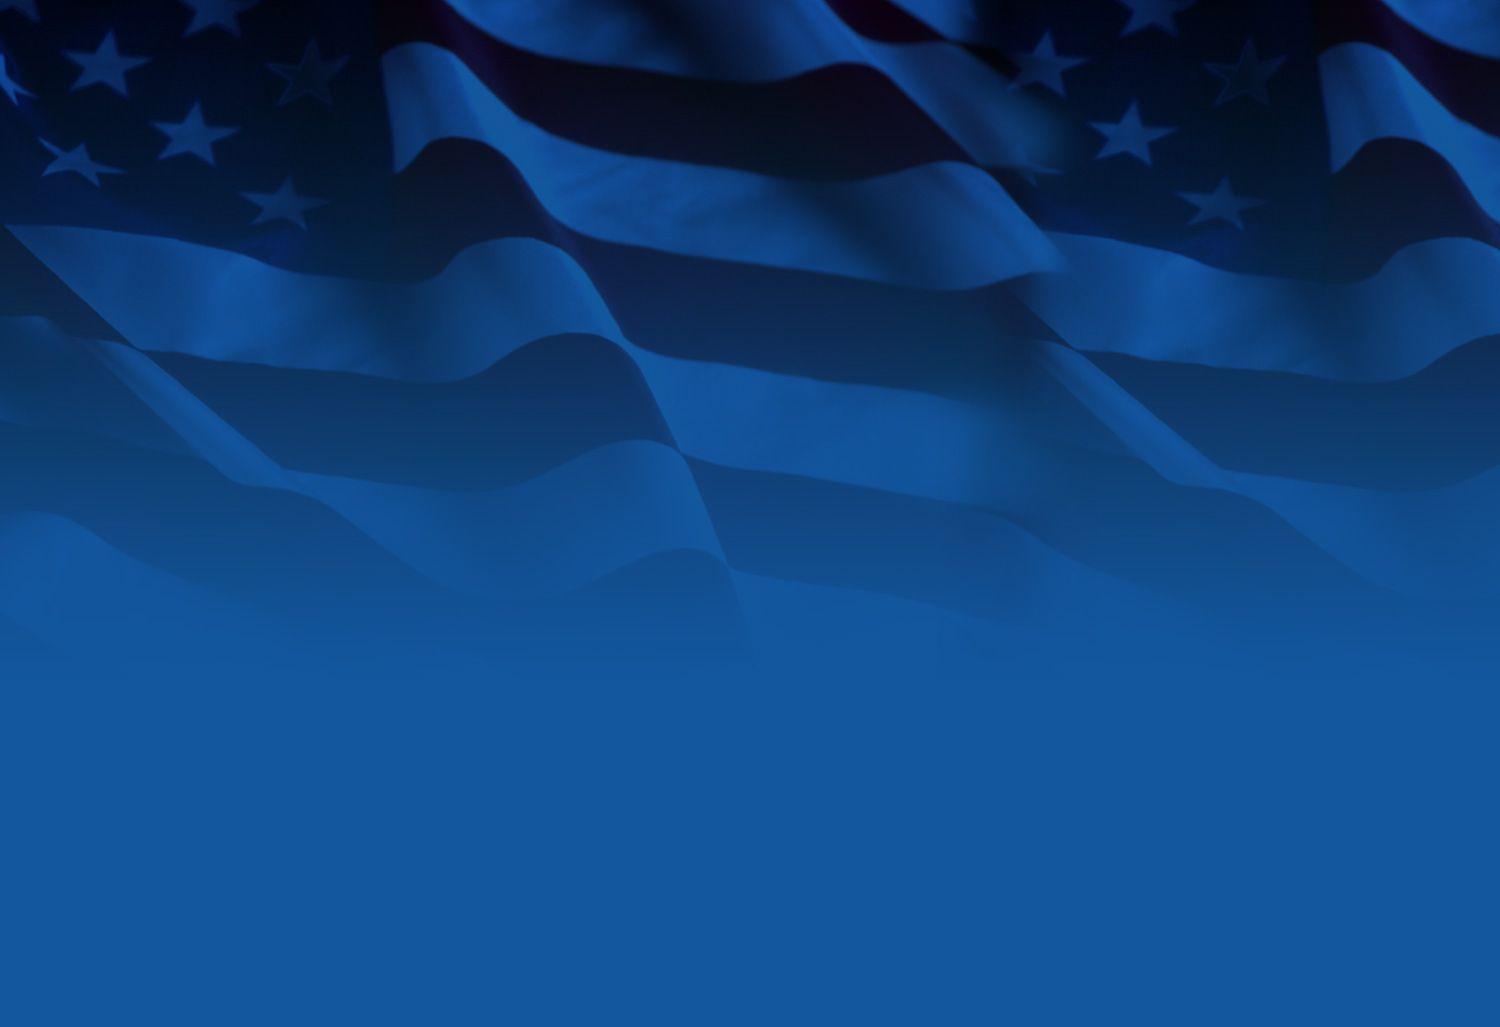 Free download Patriotic Backgrounds Image [1500x1027] for your Desktop,  Mobile & Tablet | Explore 73+ Patriotic Wallpapers | Patriotic Desktop  Backgrounds, Patriotic Background Images, Patriotic Backgrounds